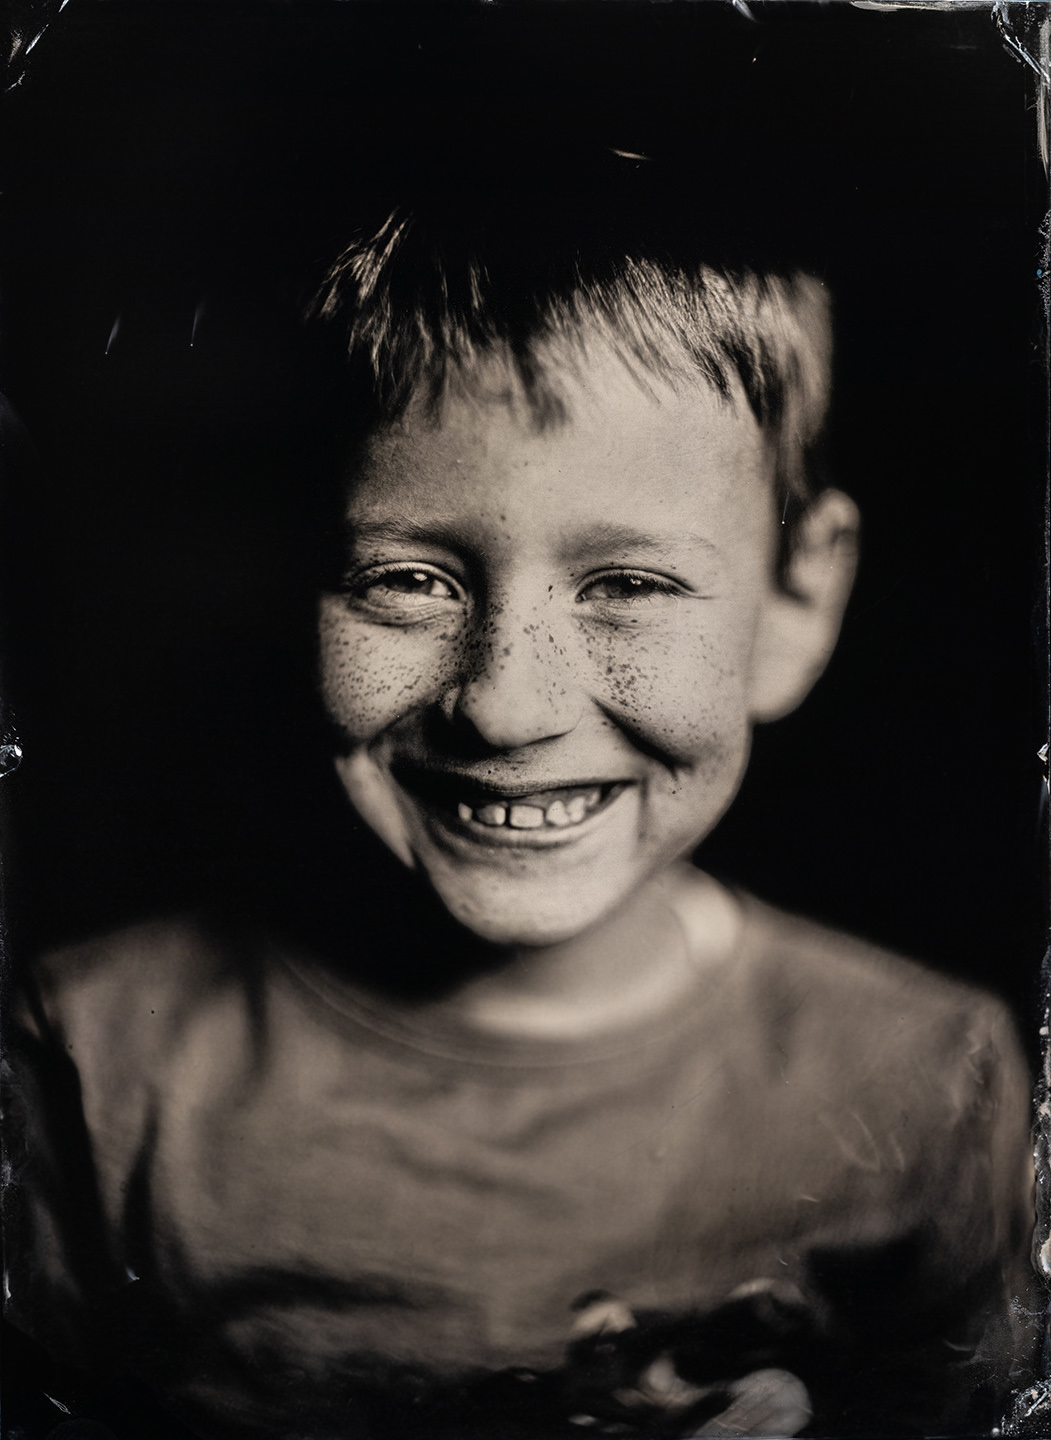 Smiling Paul © Markus Hofstätter